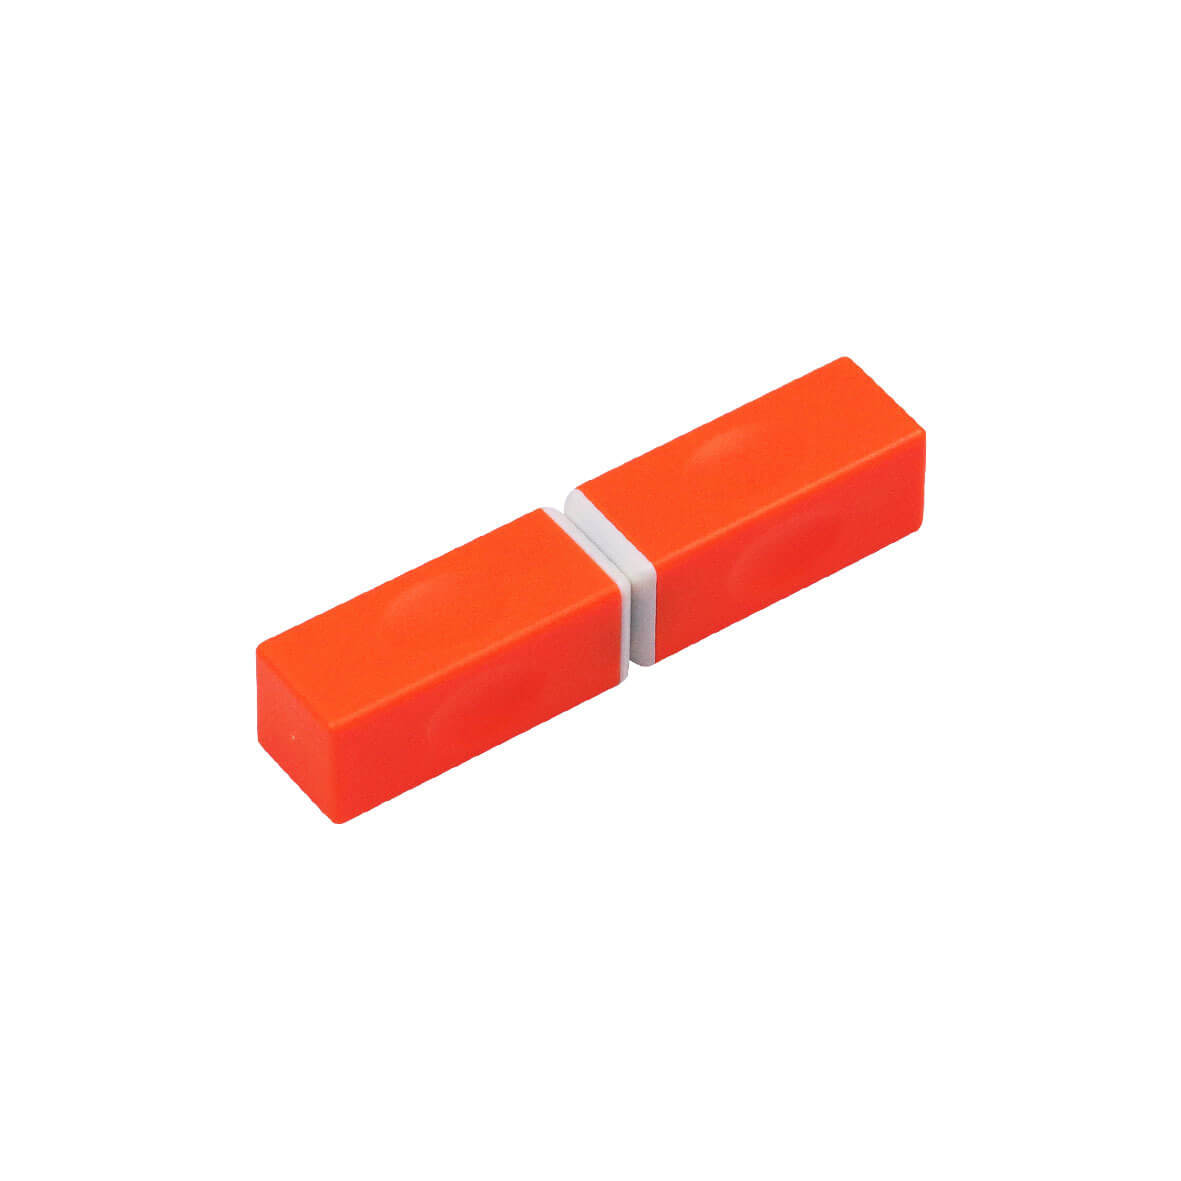 Orange Magnetic Fingertip Brick Toy